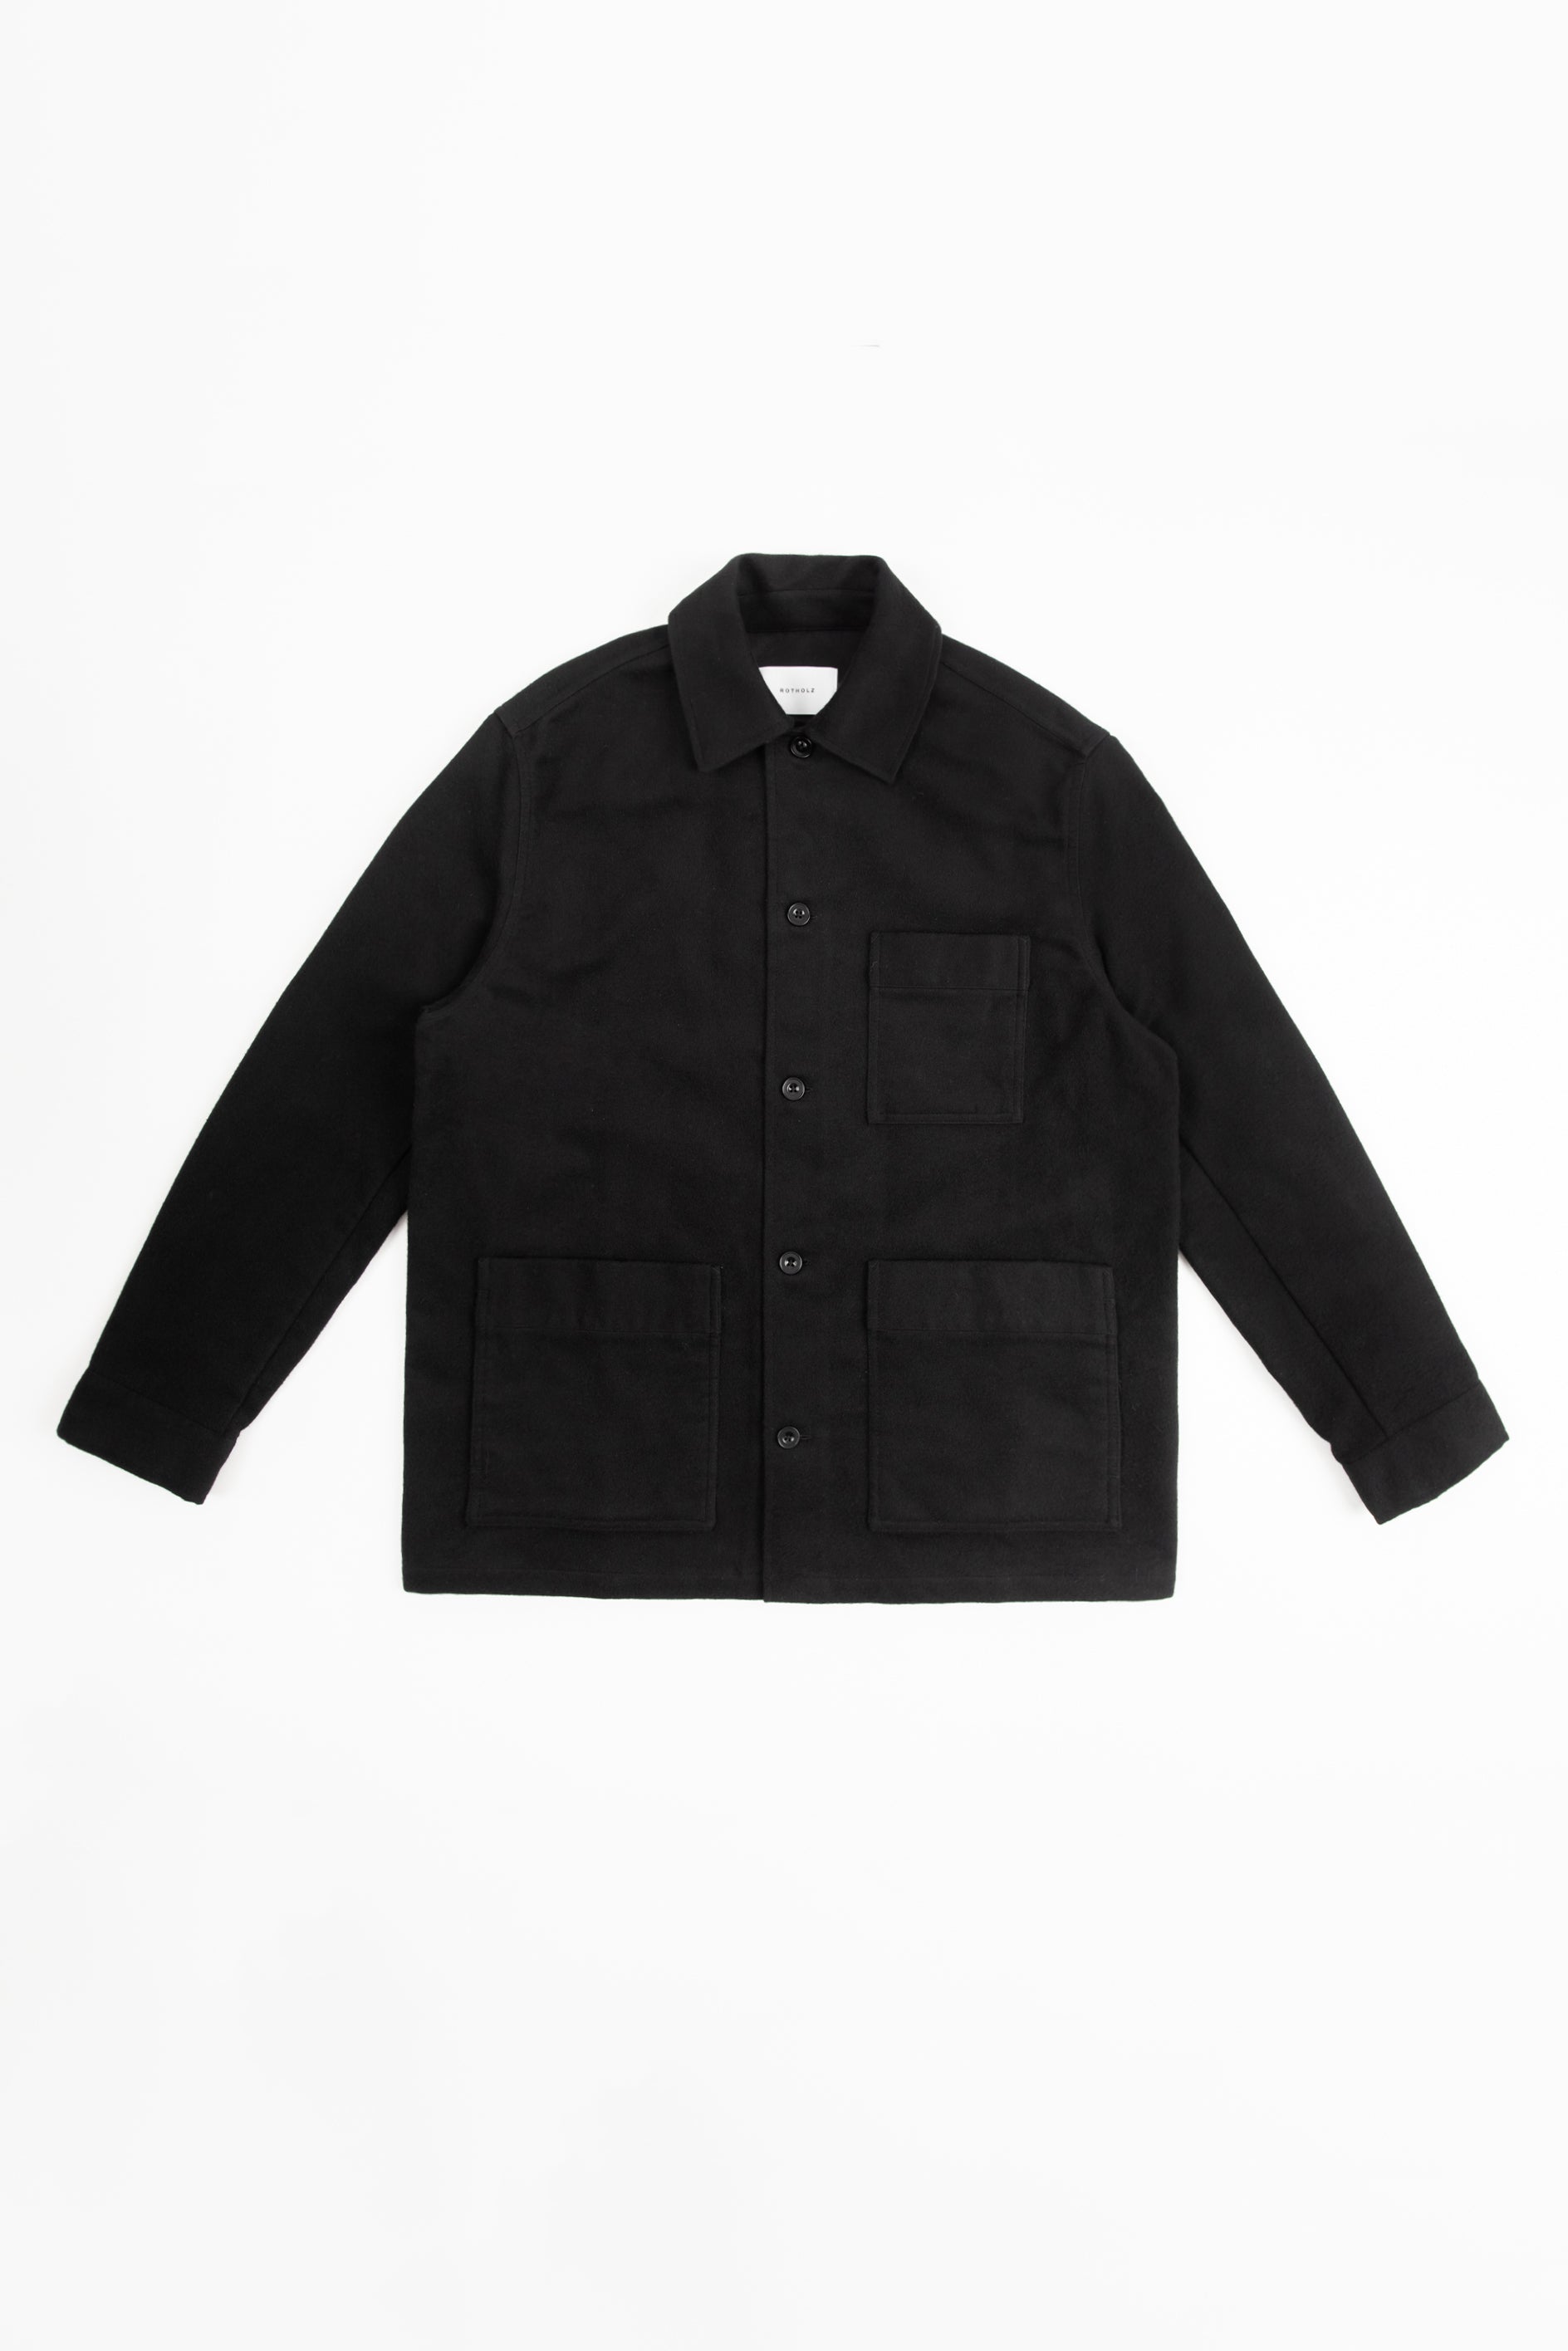 Black Moleskin jacket made from 100% organic cotton from Rotholz